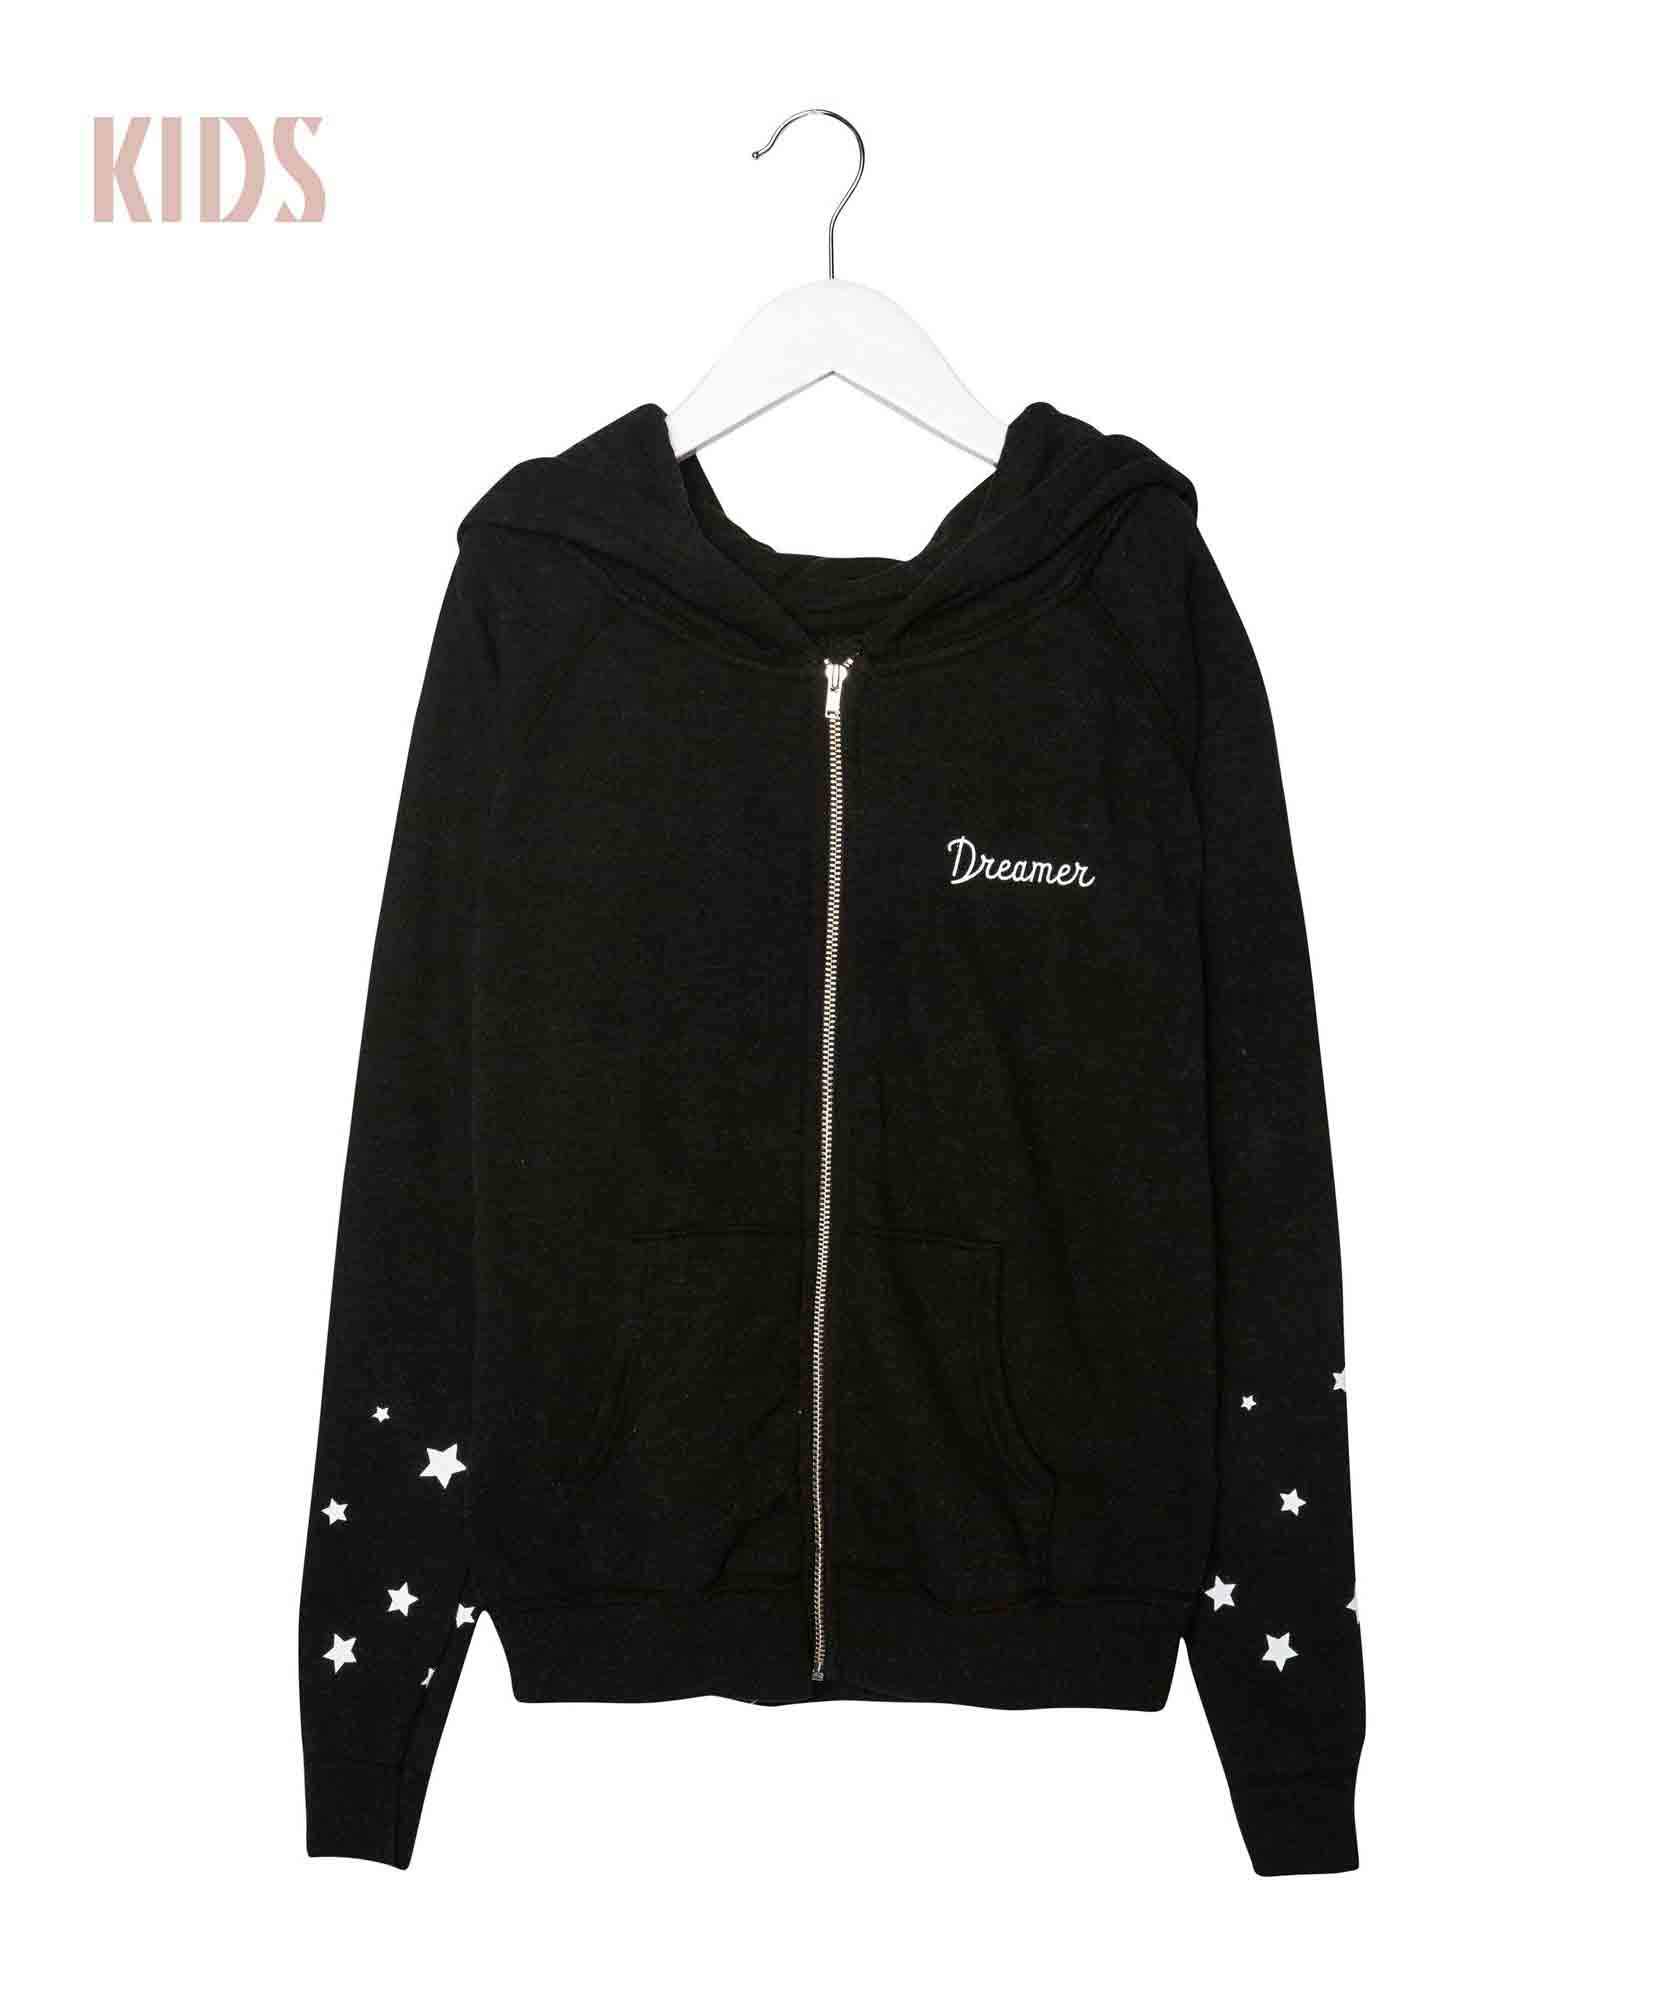 moon stars magic hoodie kids